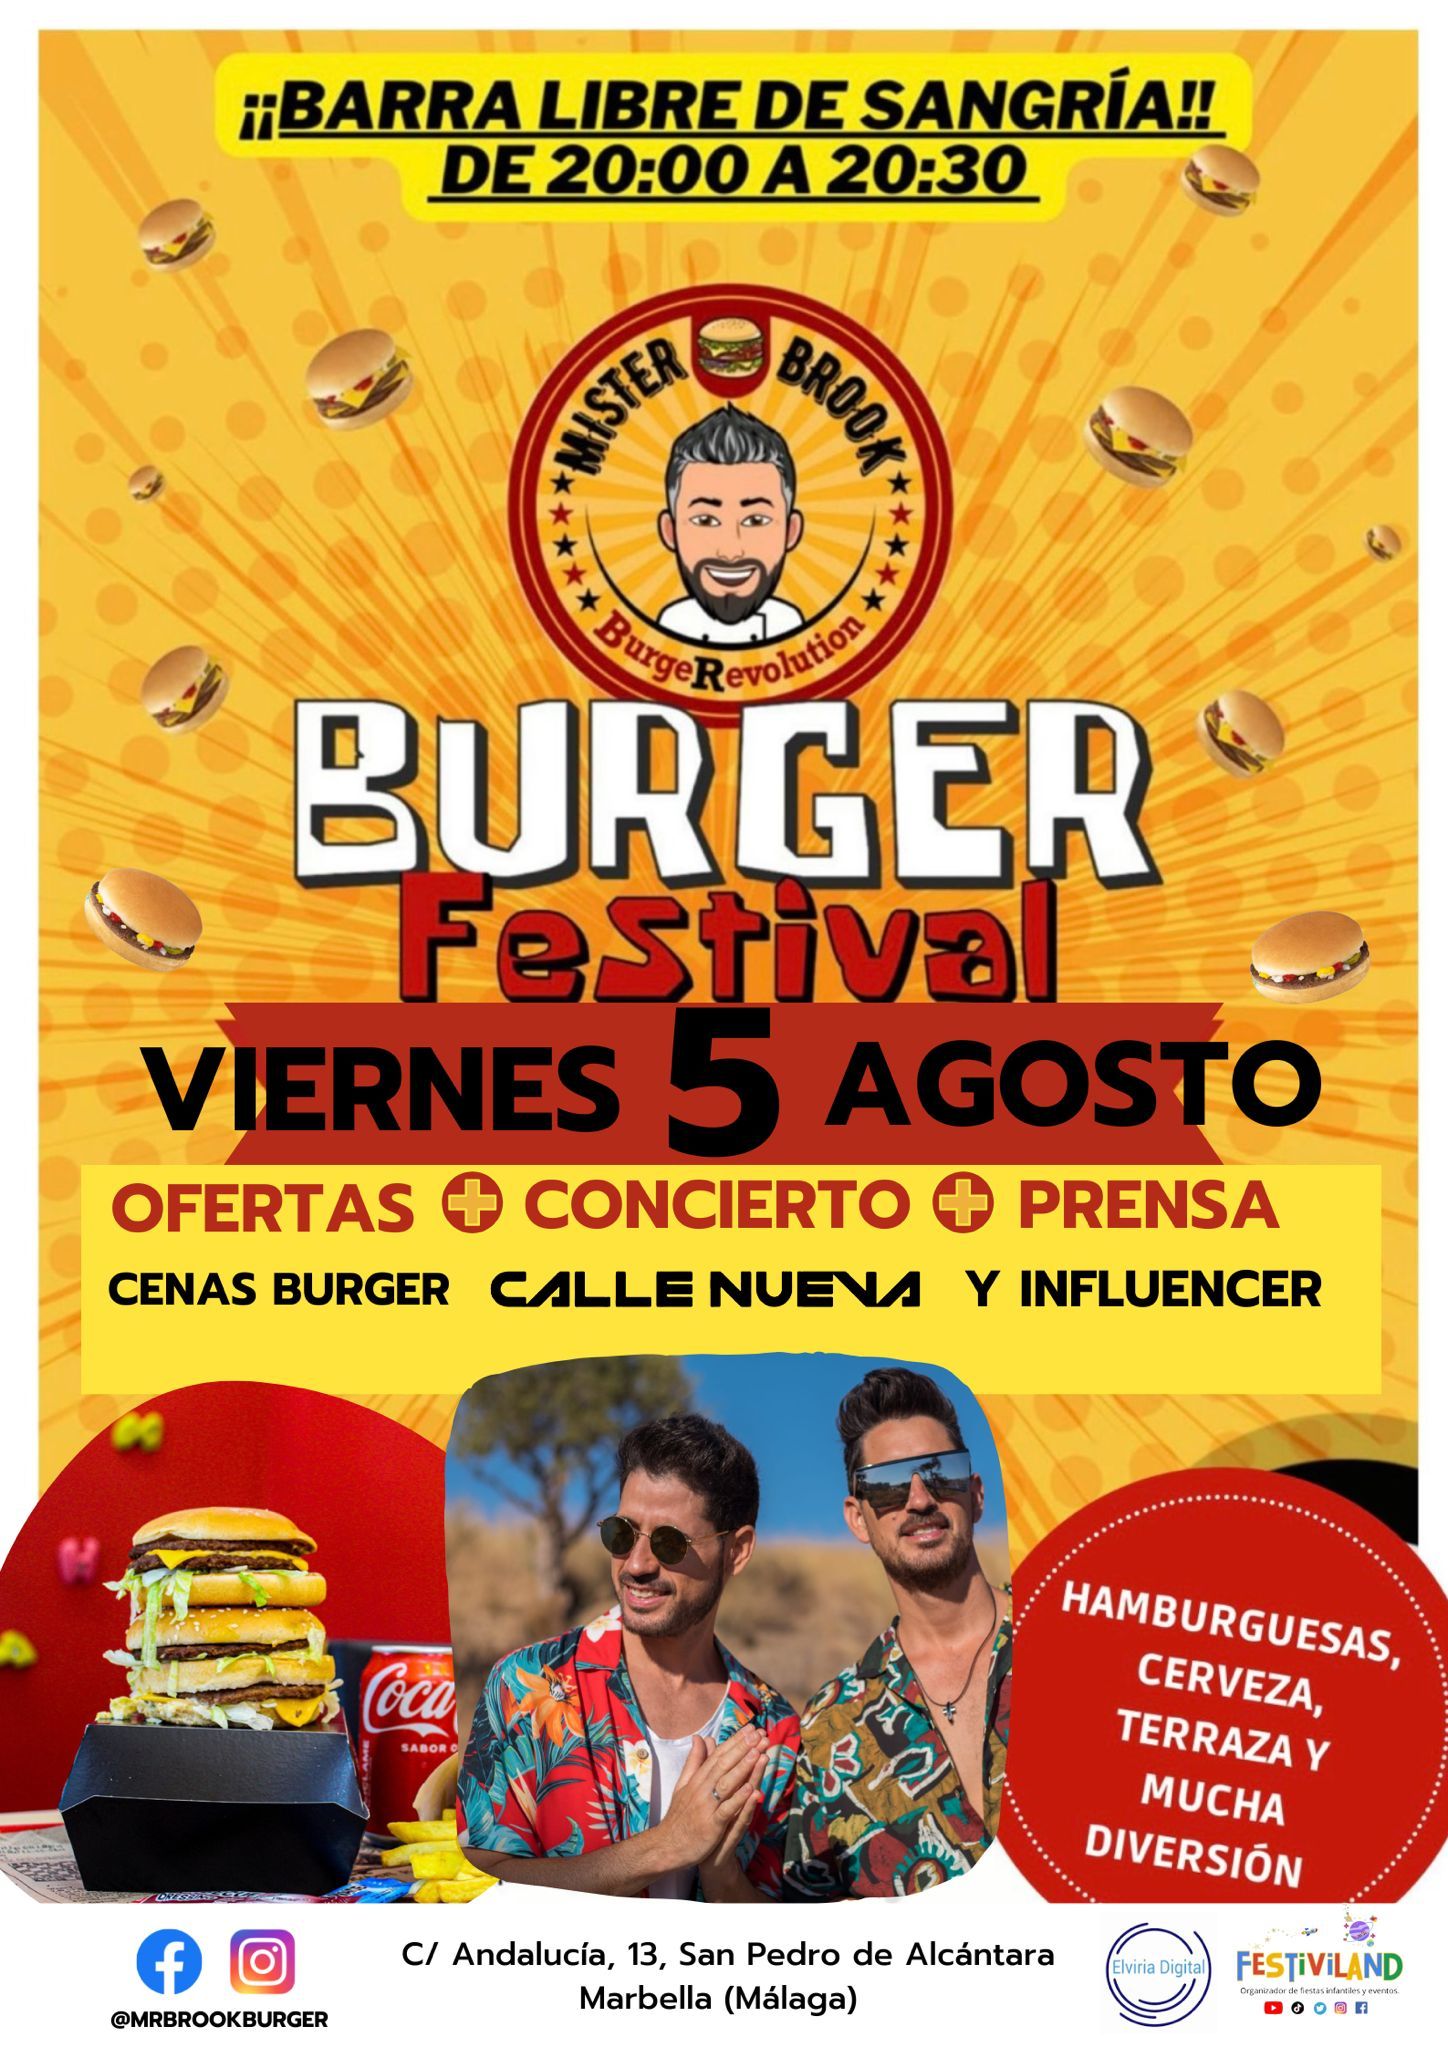 Mr Brook Burger presenta el primer"Burger Festival" en Marbella